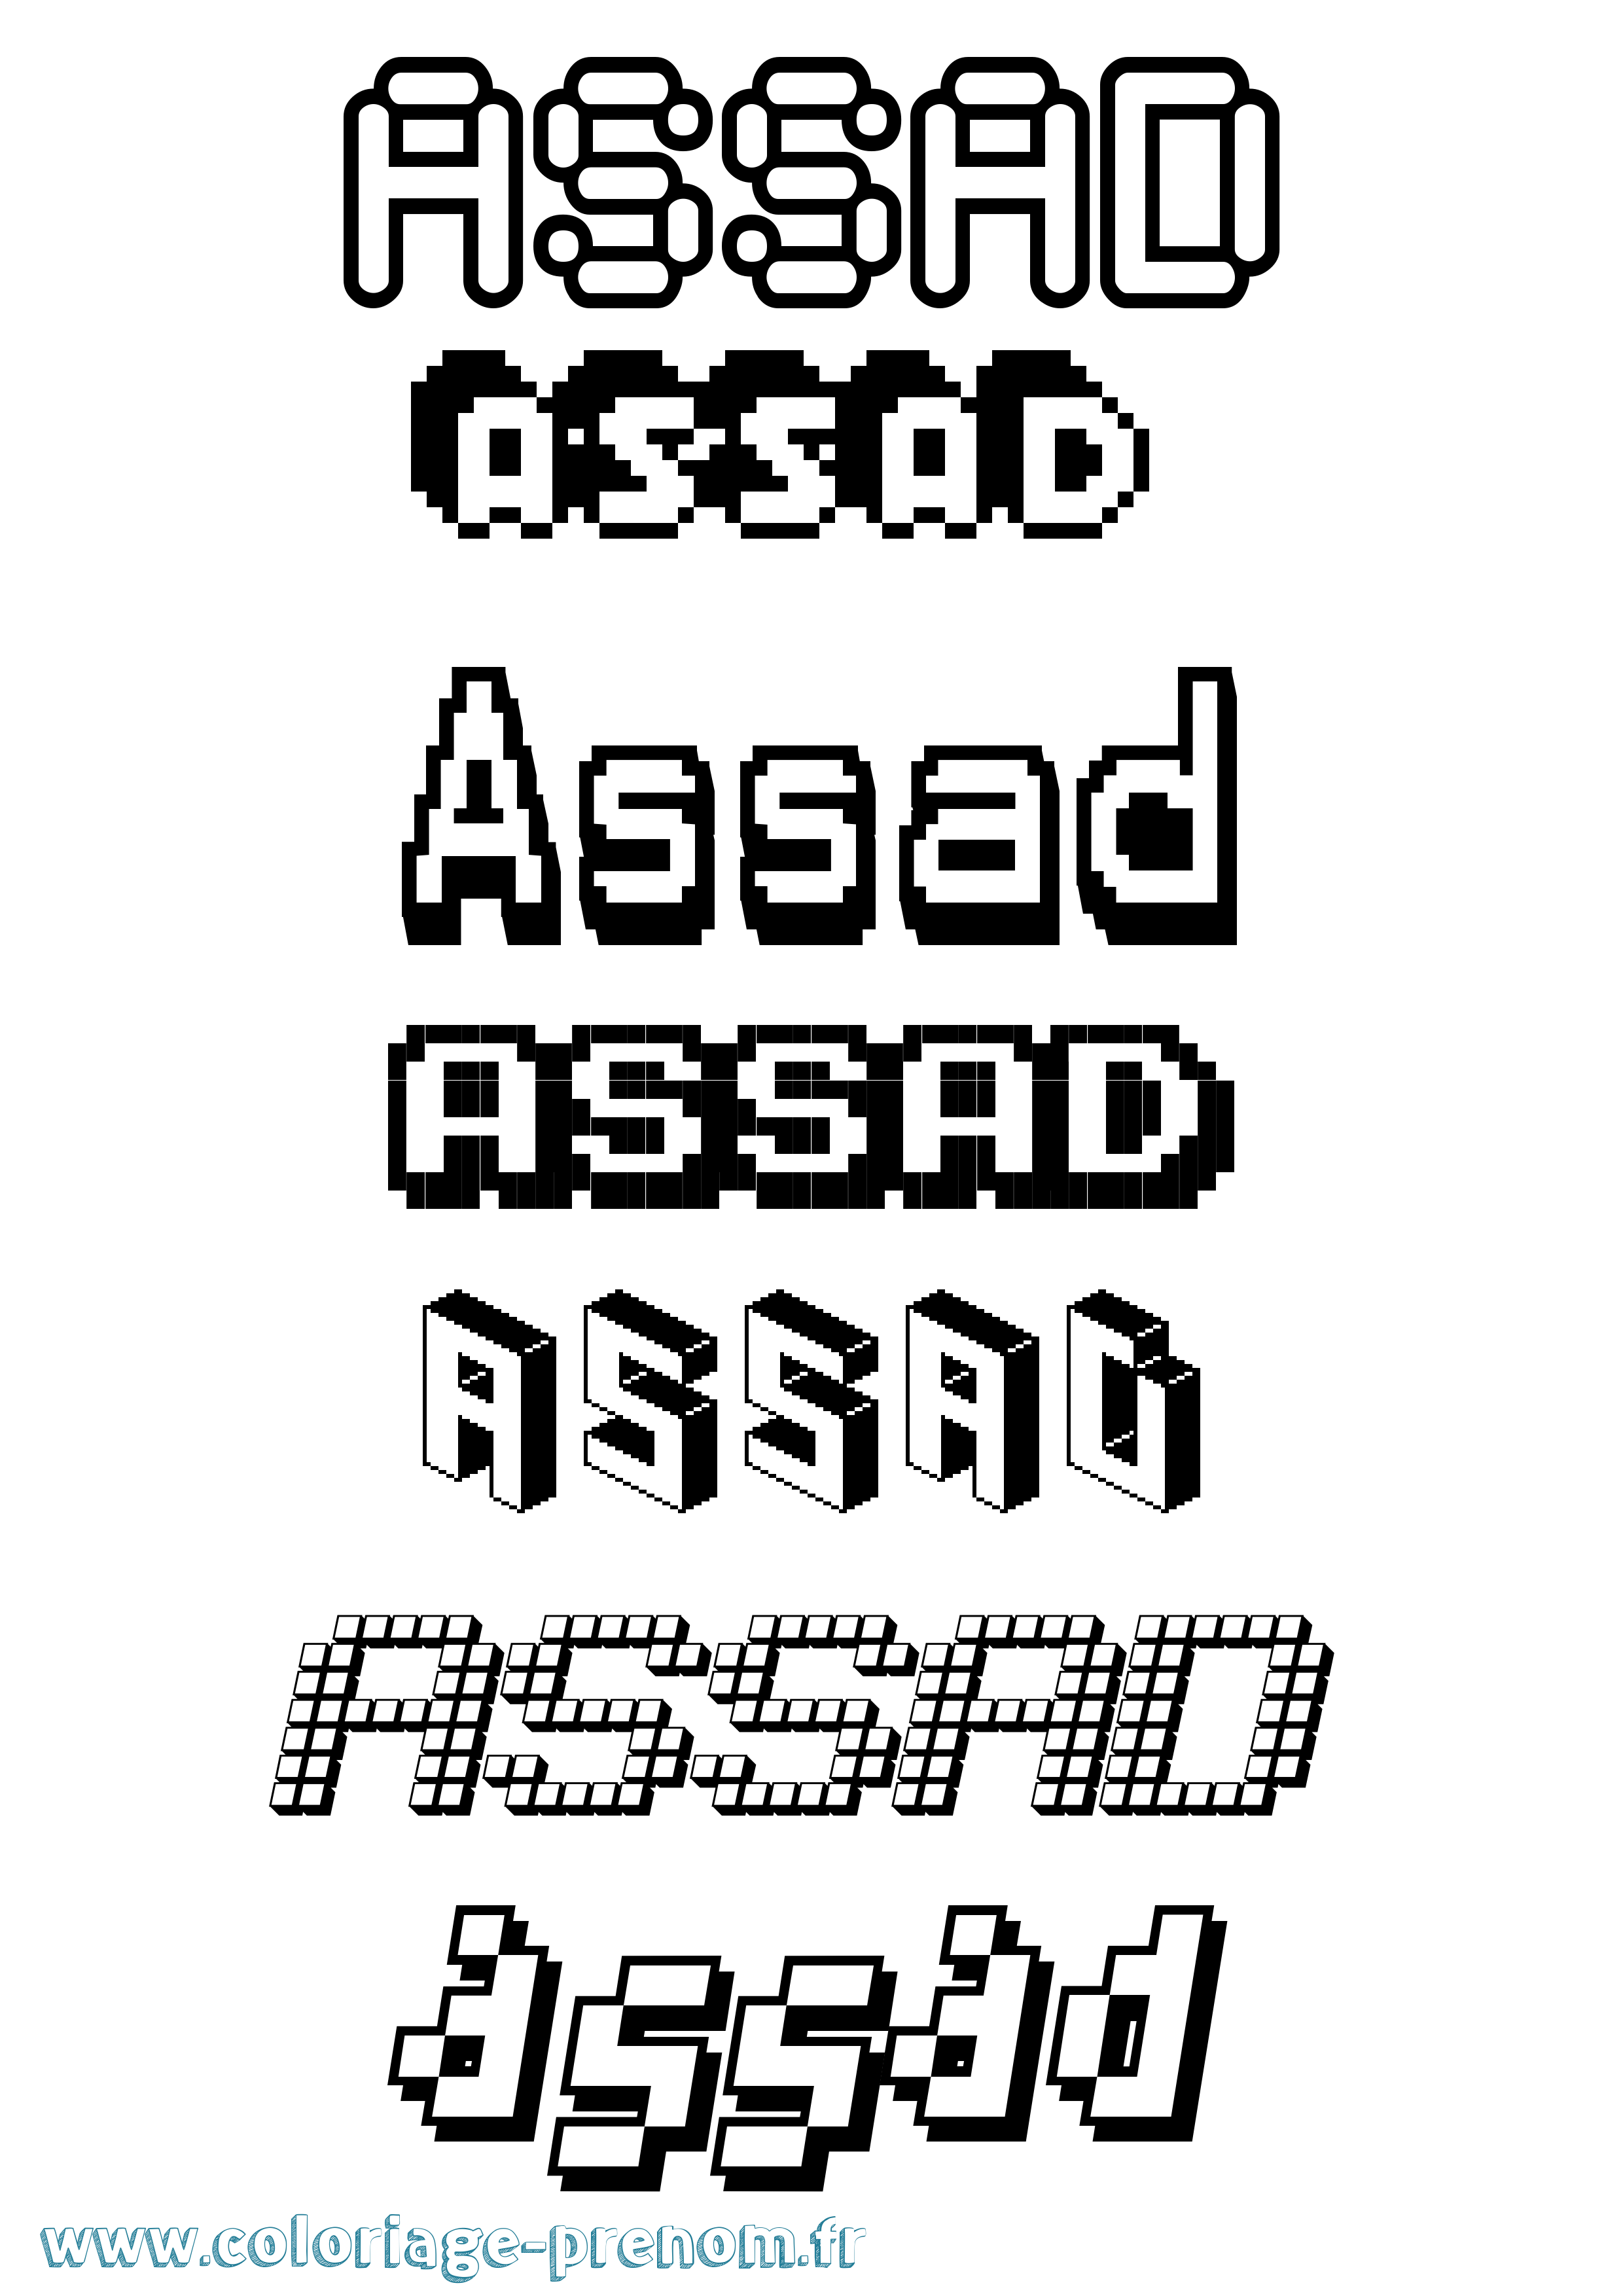 Coloriage prénom Assad Pixel